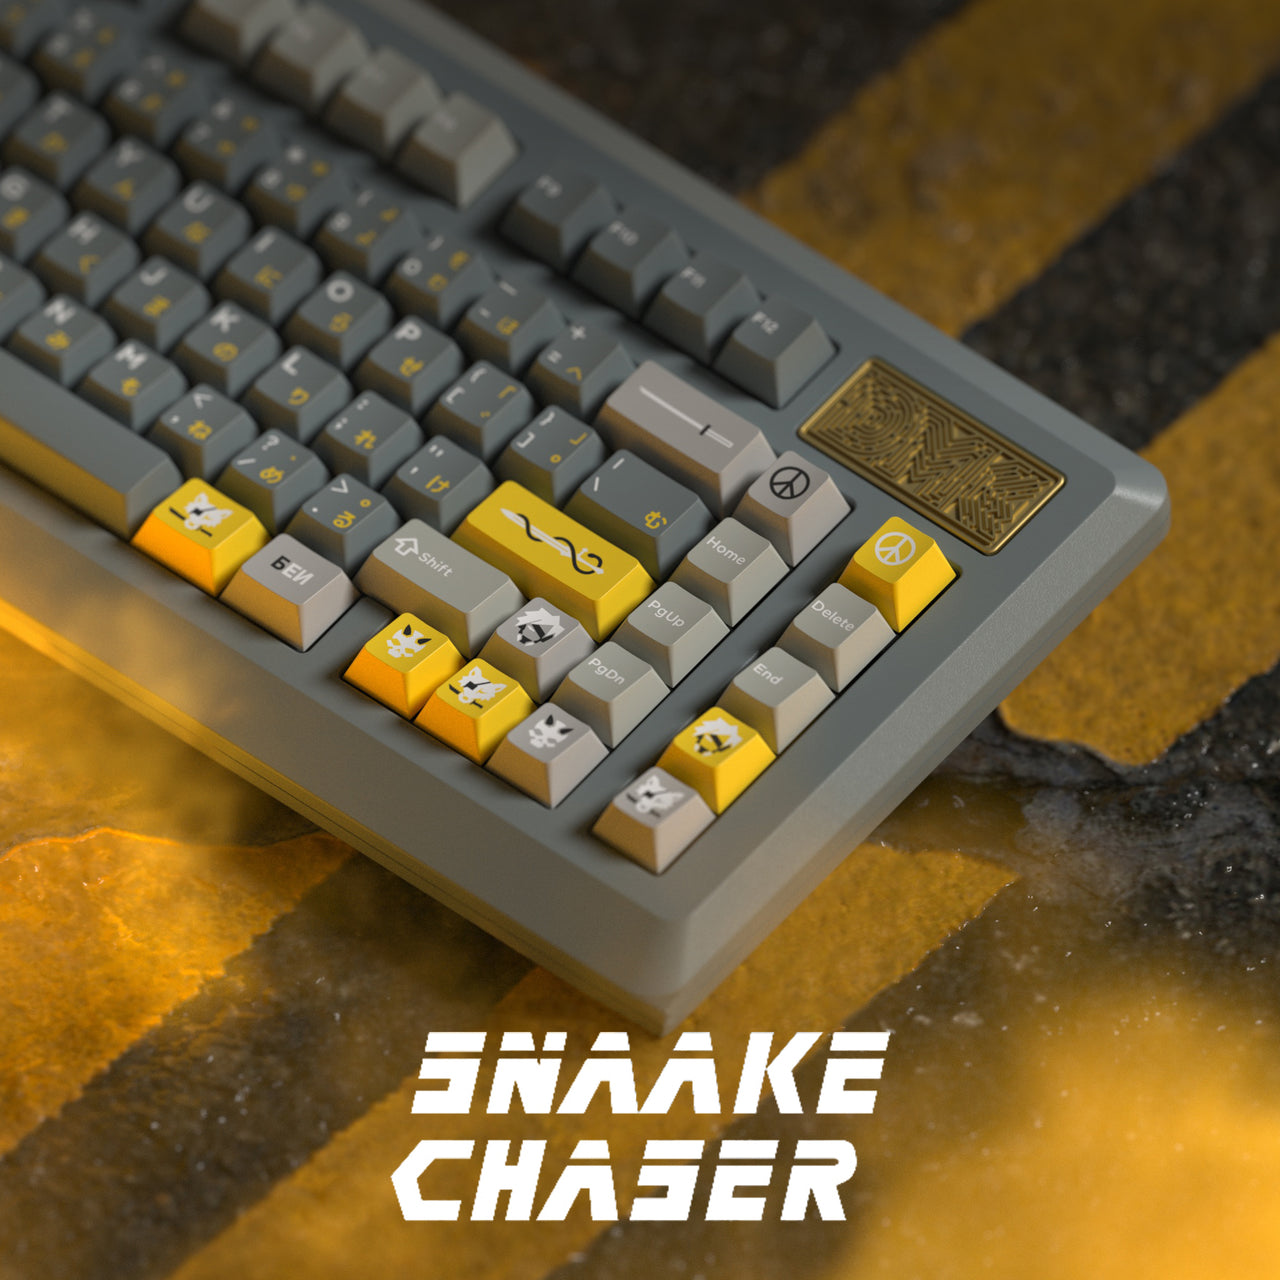 Domikey Snaake Chaser Keycap Set